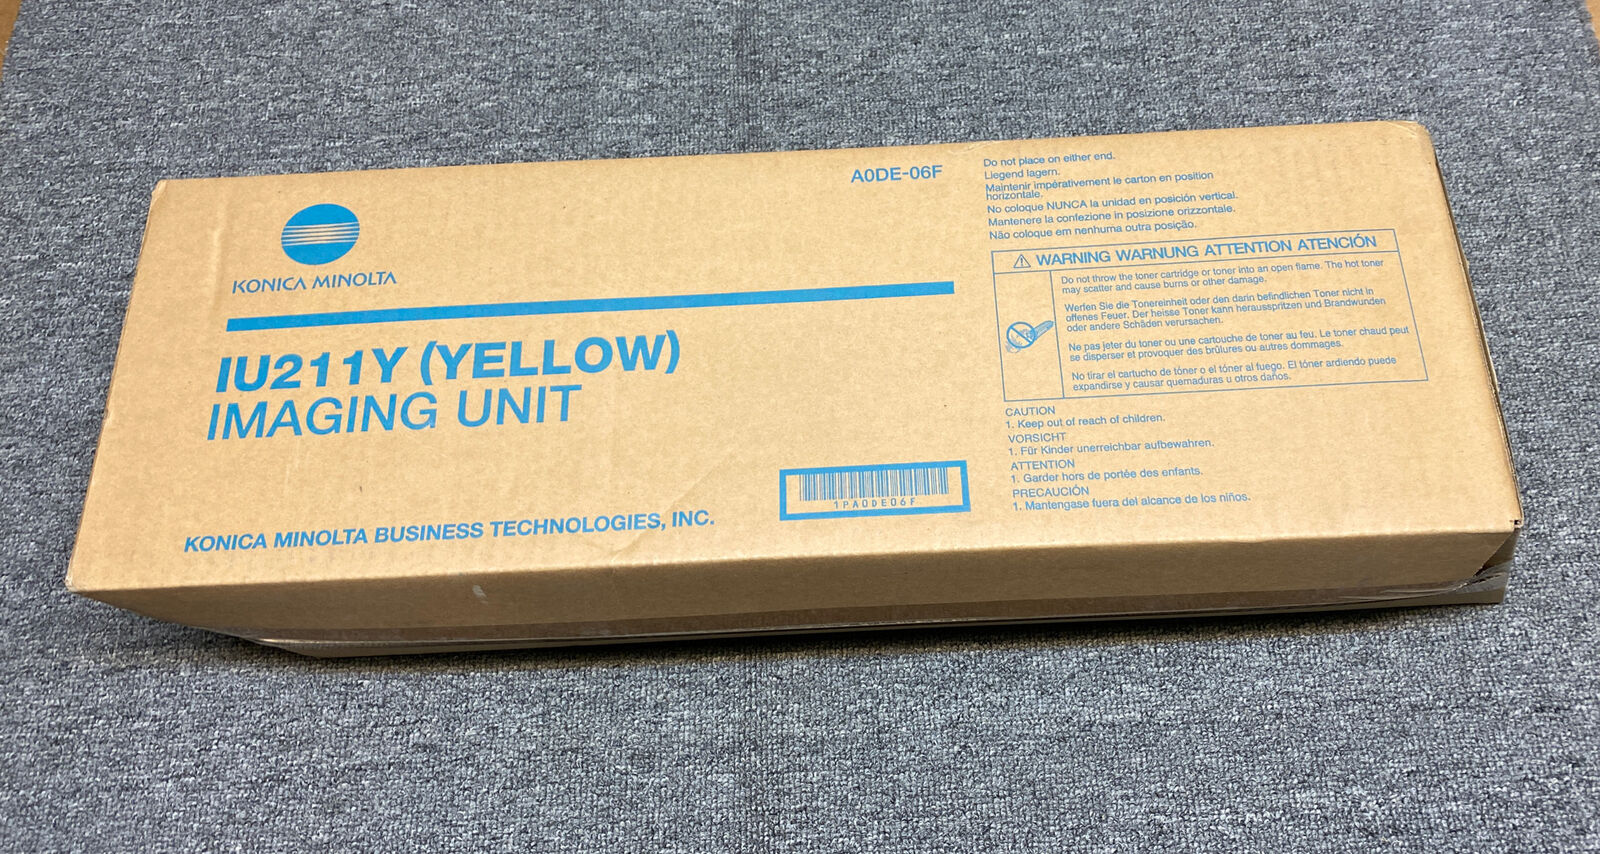 Genuine Konica Minolta IU211Y Yellow Imaging Unit Bizhub C203 C253 A0DE-06F New